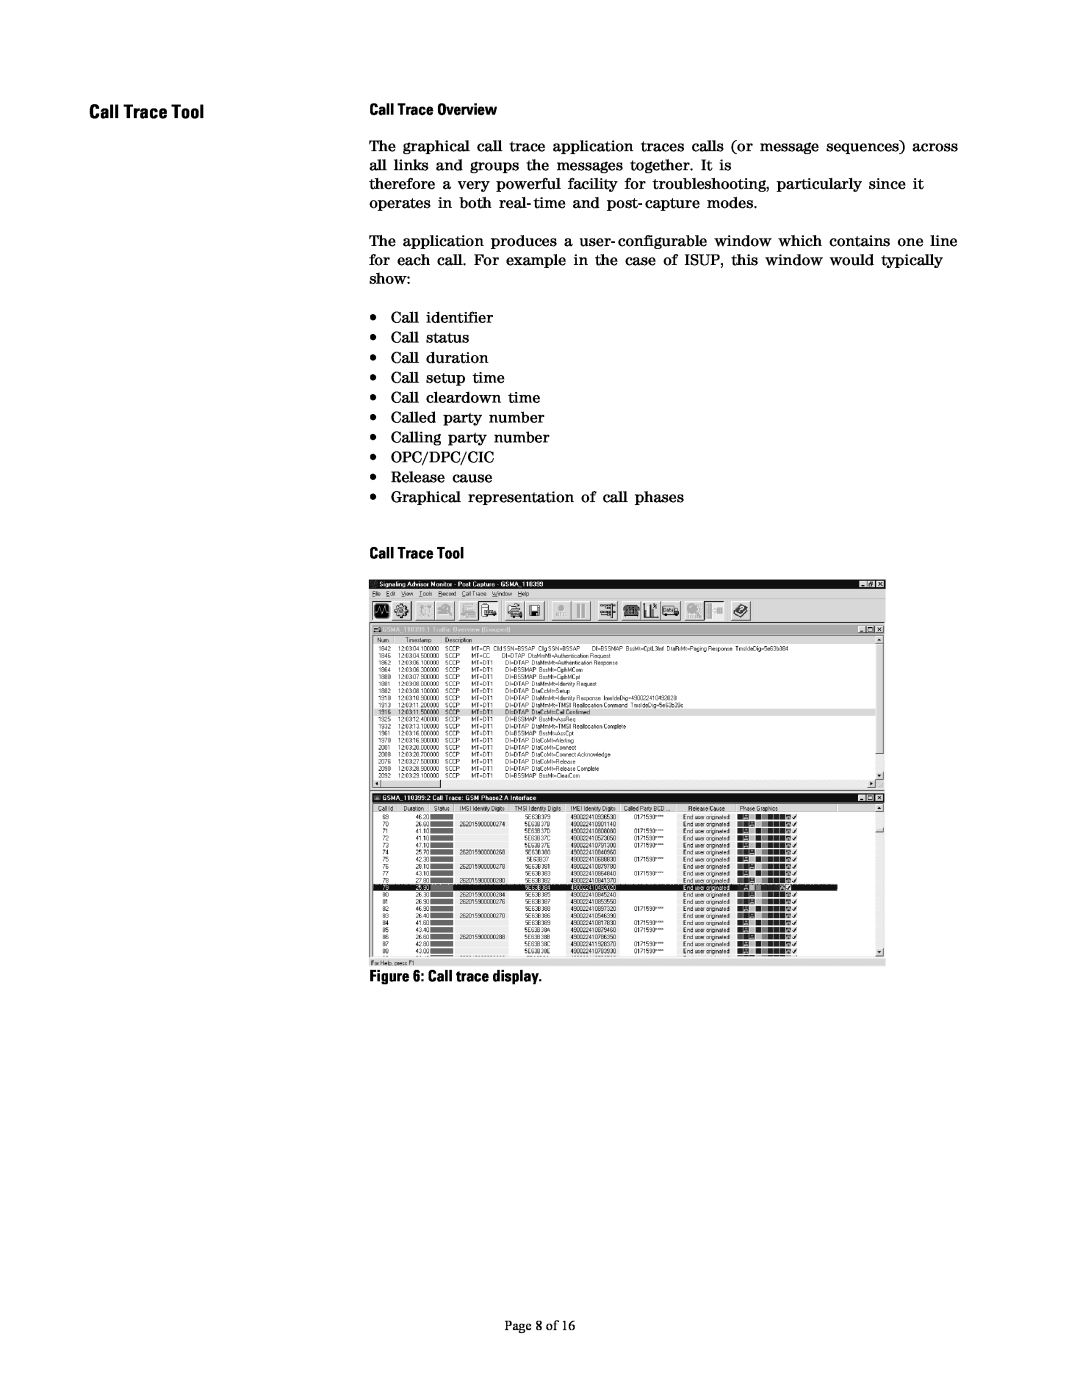 Agilent Technologies 37907A manual Call Trace Overview, Call Trace Tool Call trace display 